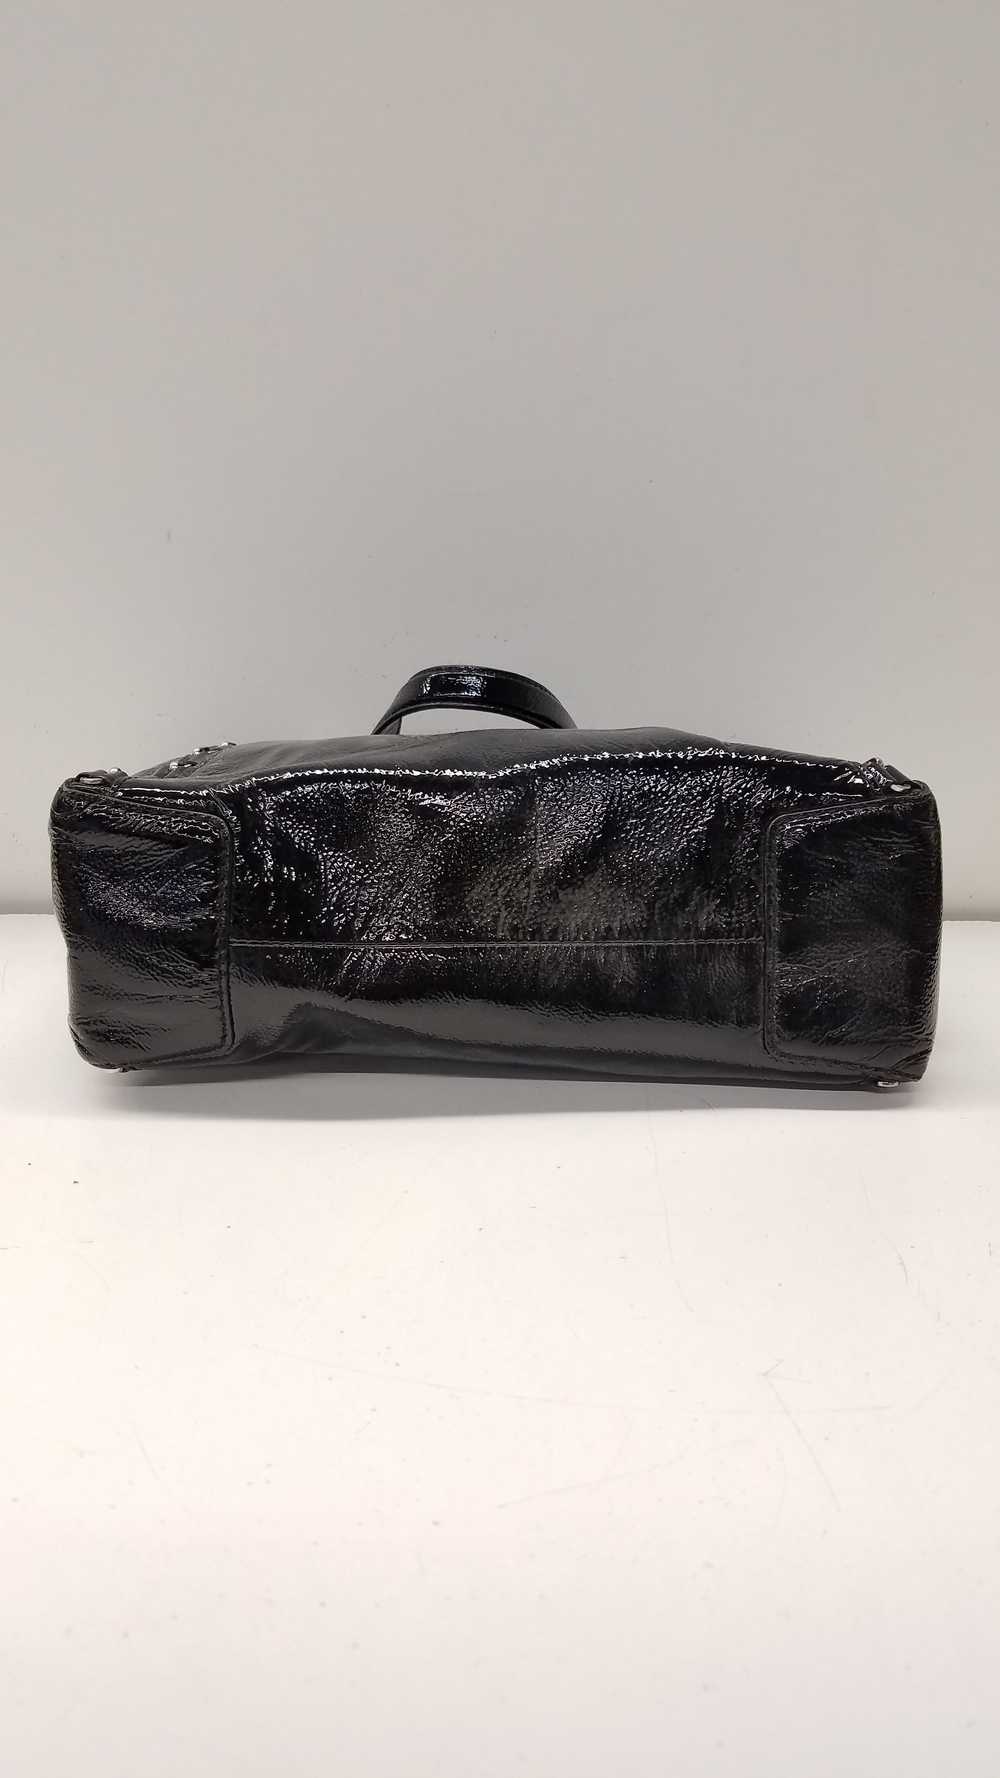 Michael Kors Patent Leather Satchel Black - image 4